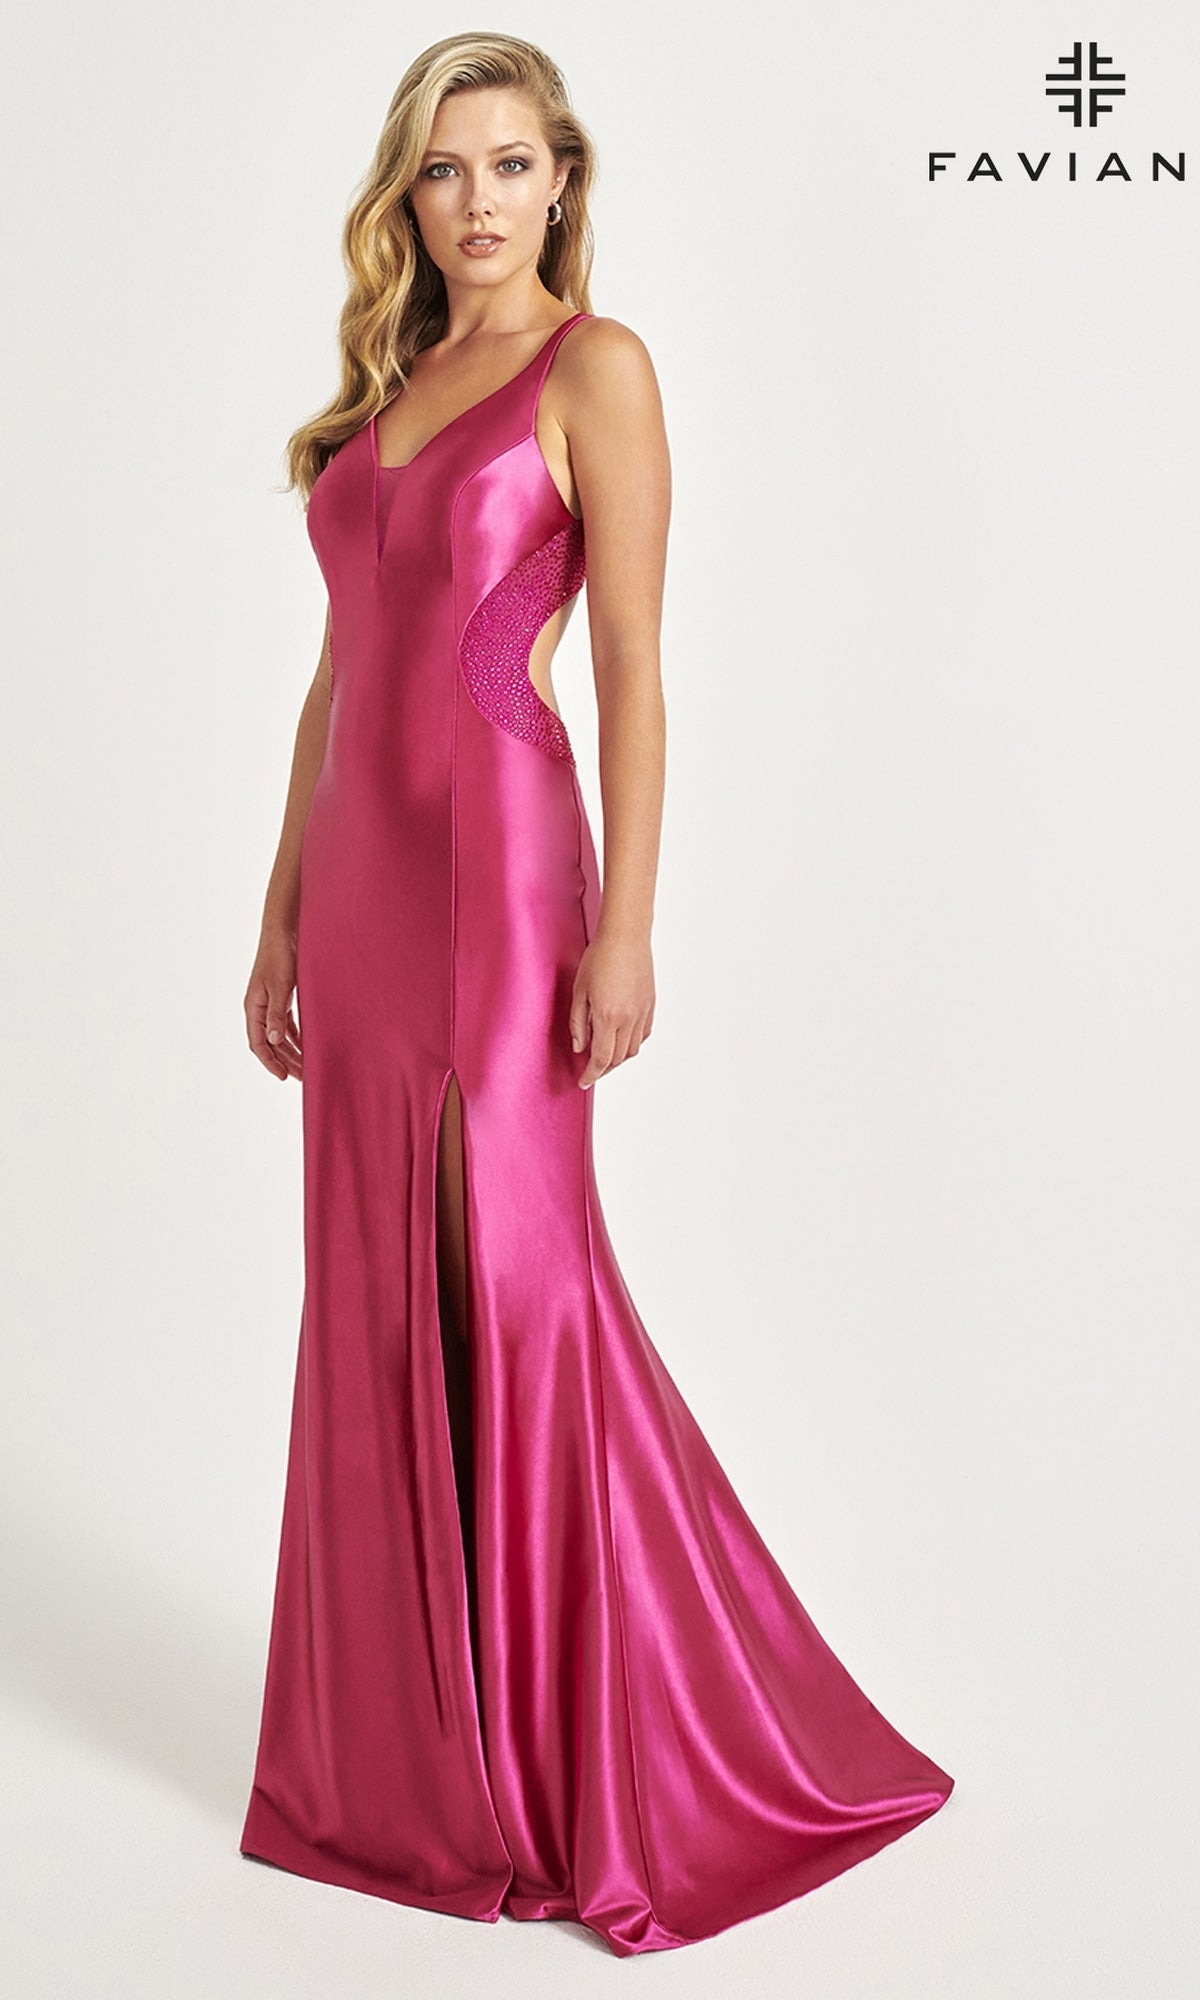 Sheer-Sides Faviana Slinky Long Prom Dress 11008